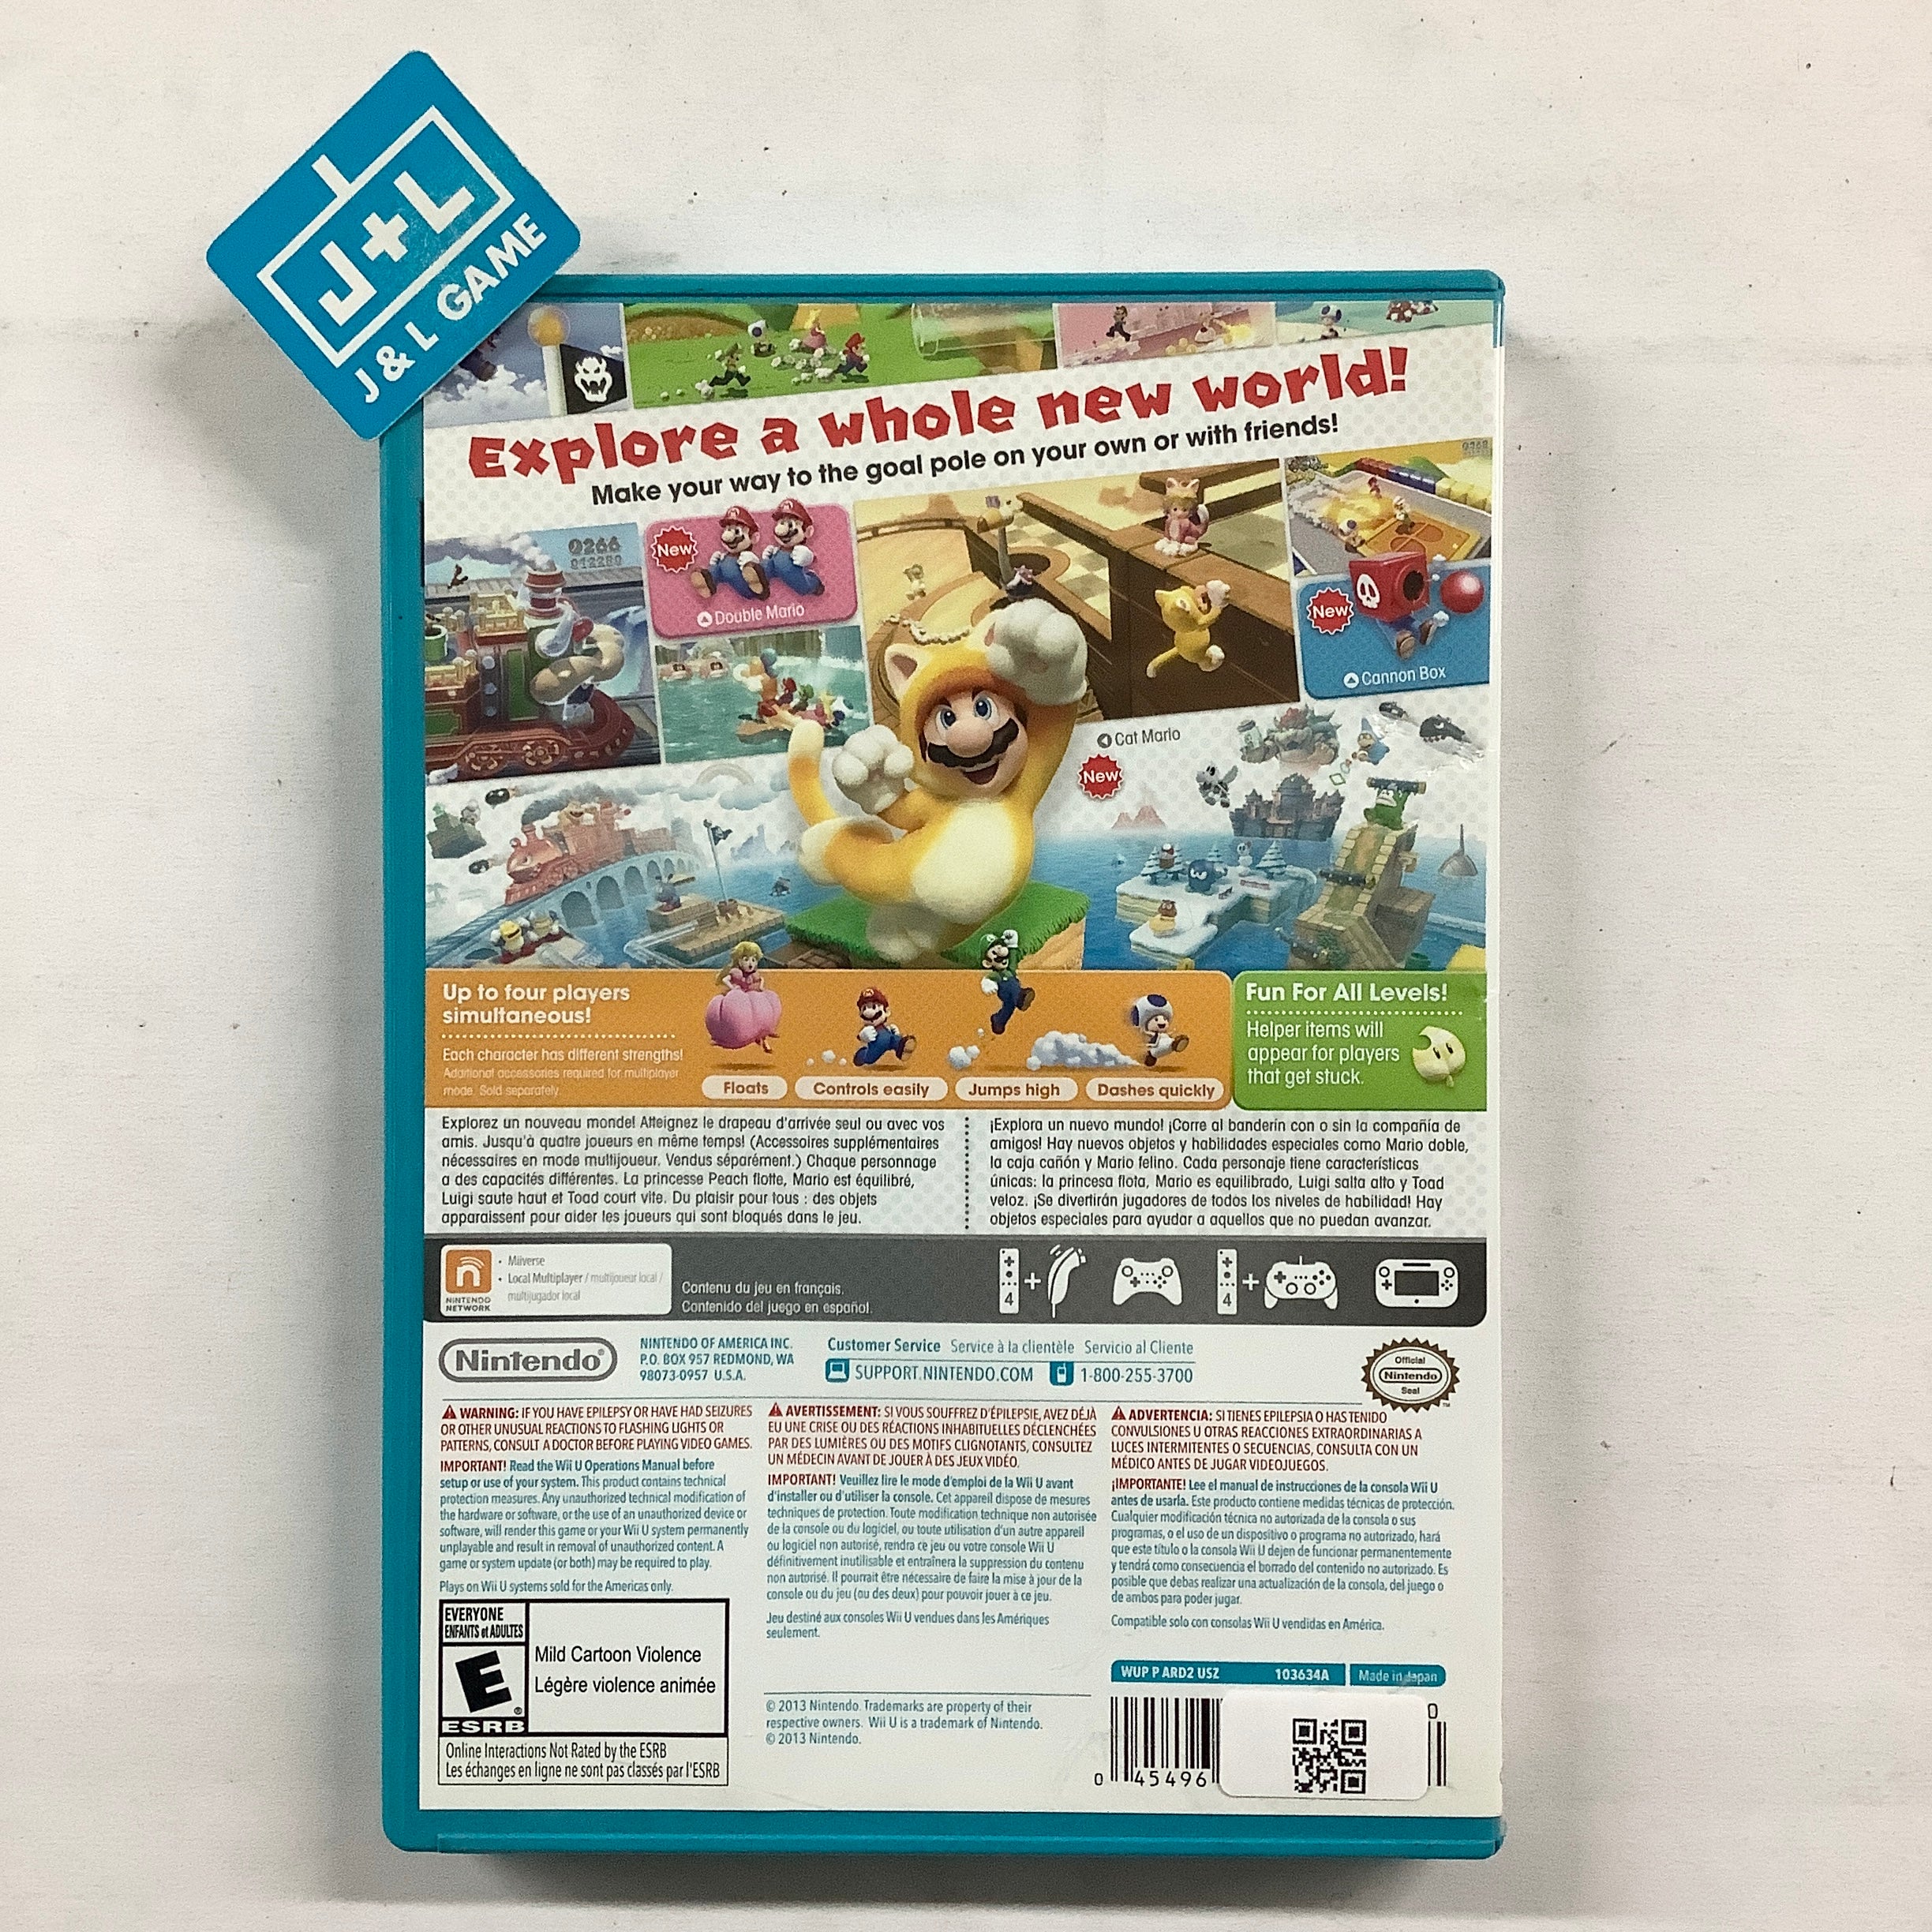 Super Mario 3D World (Nintendo Selects) - Nintendo Wii U [Pre-Owned] Video Games Nintendo   